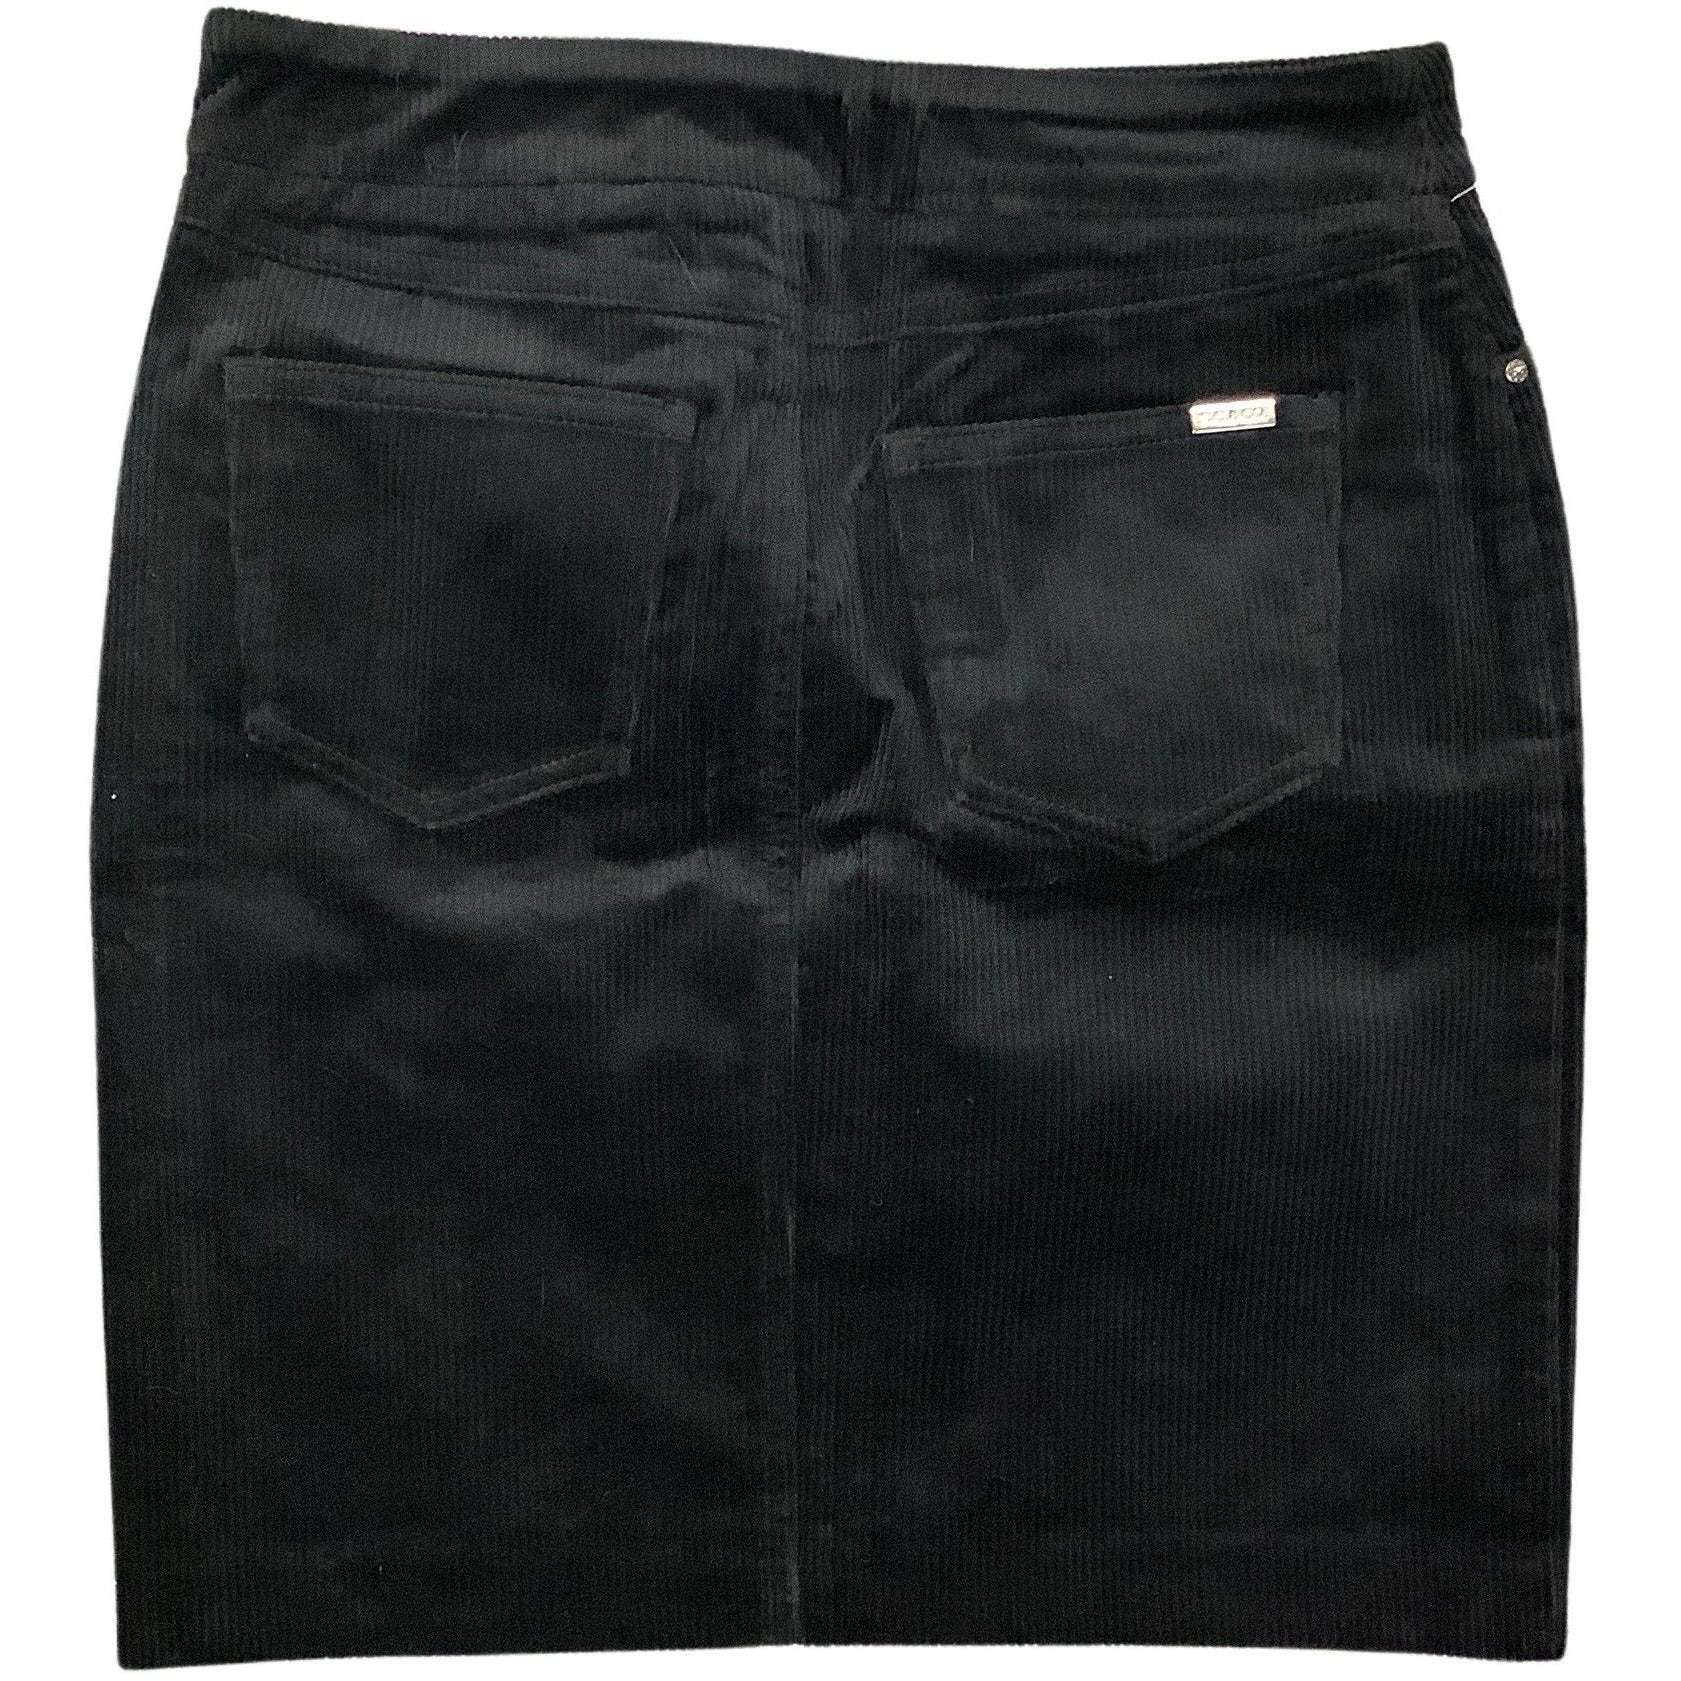 S.C & Co. Women's Corduroy Skirt: Black: Size 4